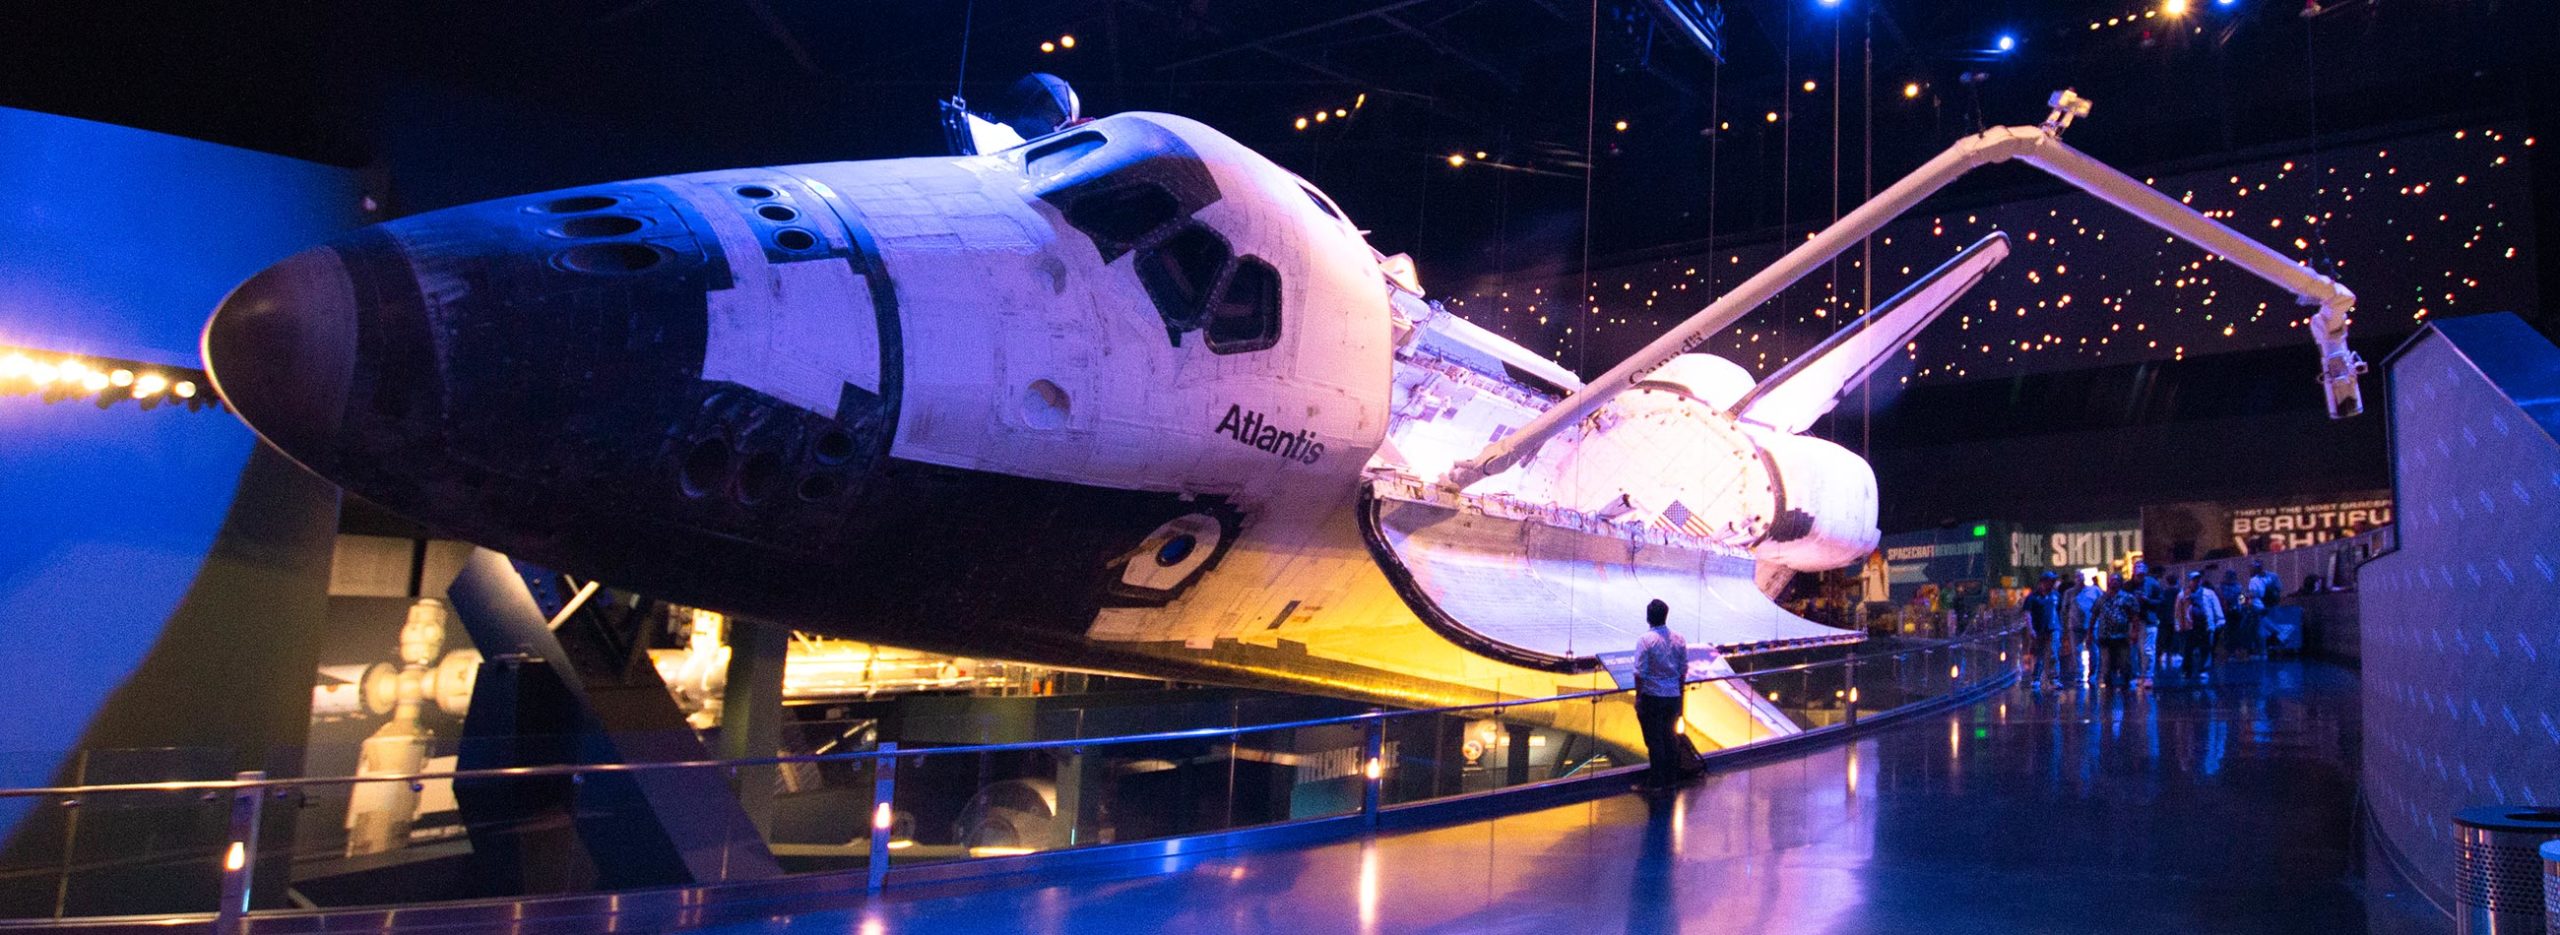 Navette spatiale Atlantis, Space Kennedy Center, Orlando, Floride, États-Unis / Atlantis Space Shuttle, NASA, Kennedy Space Center, Florida, USA